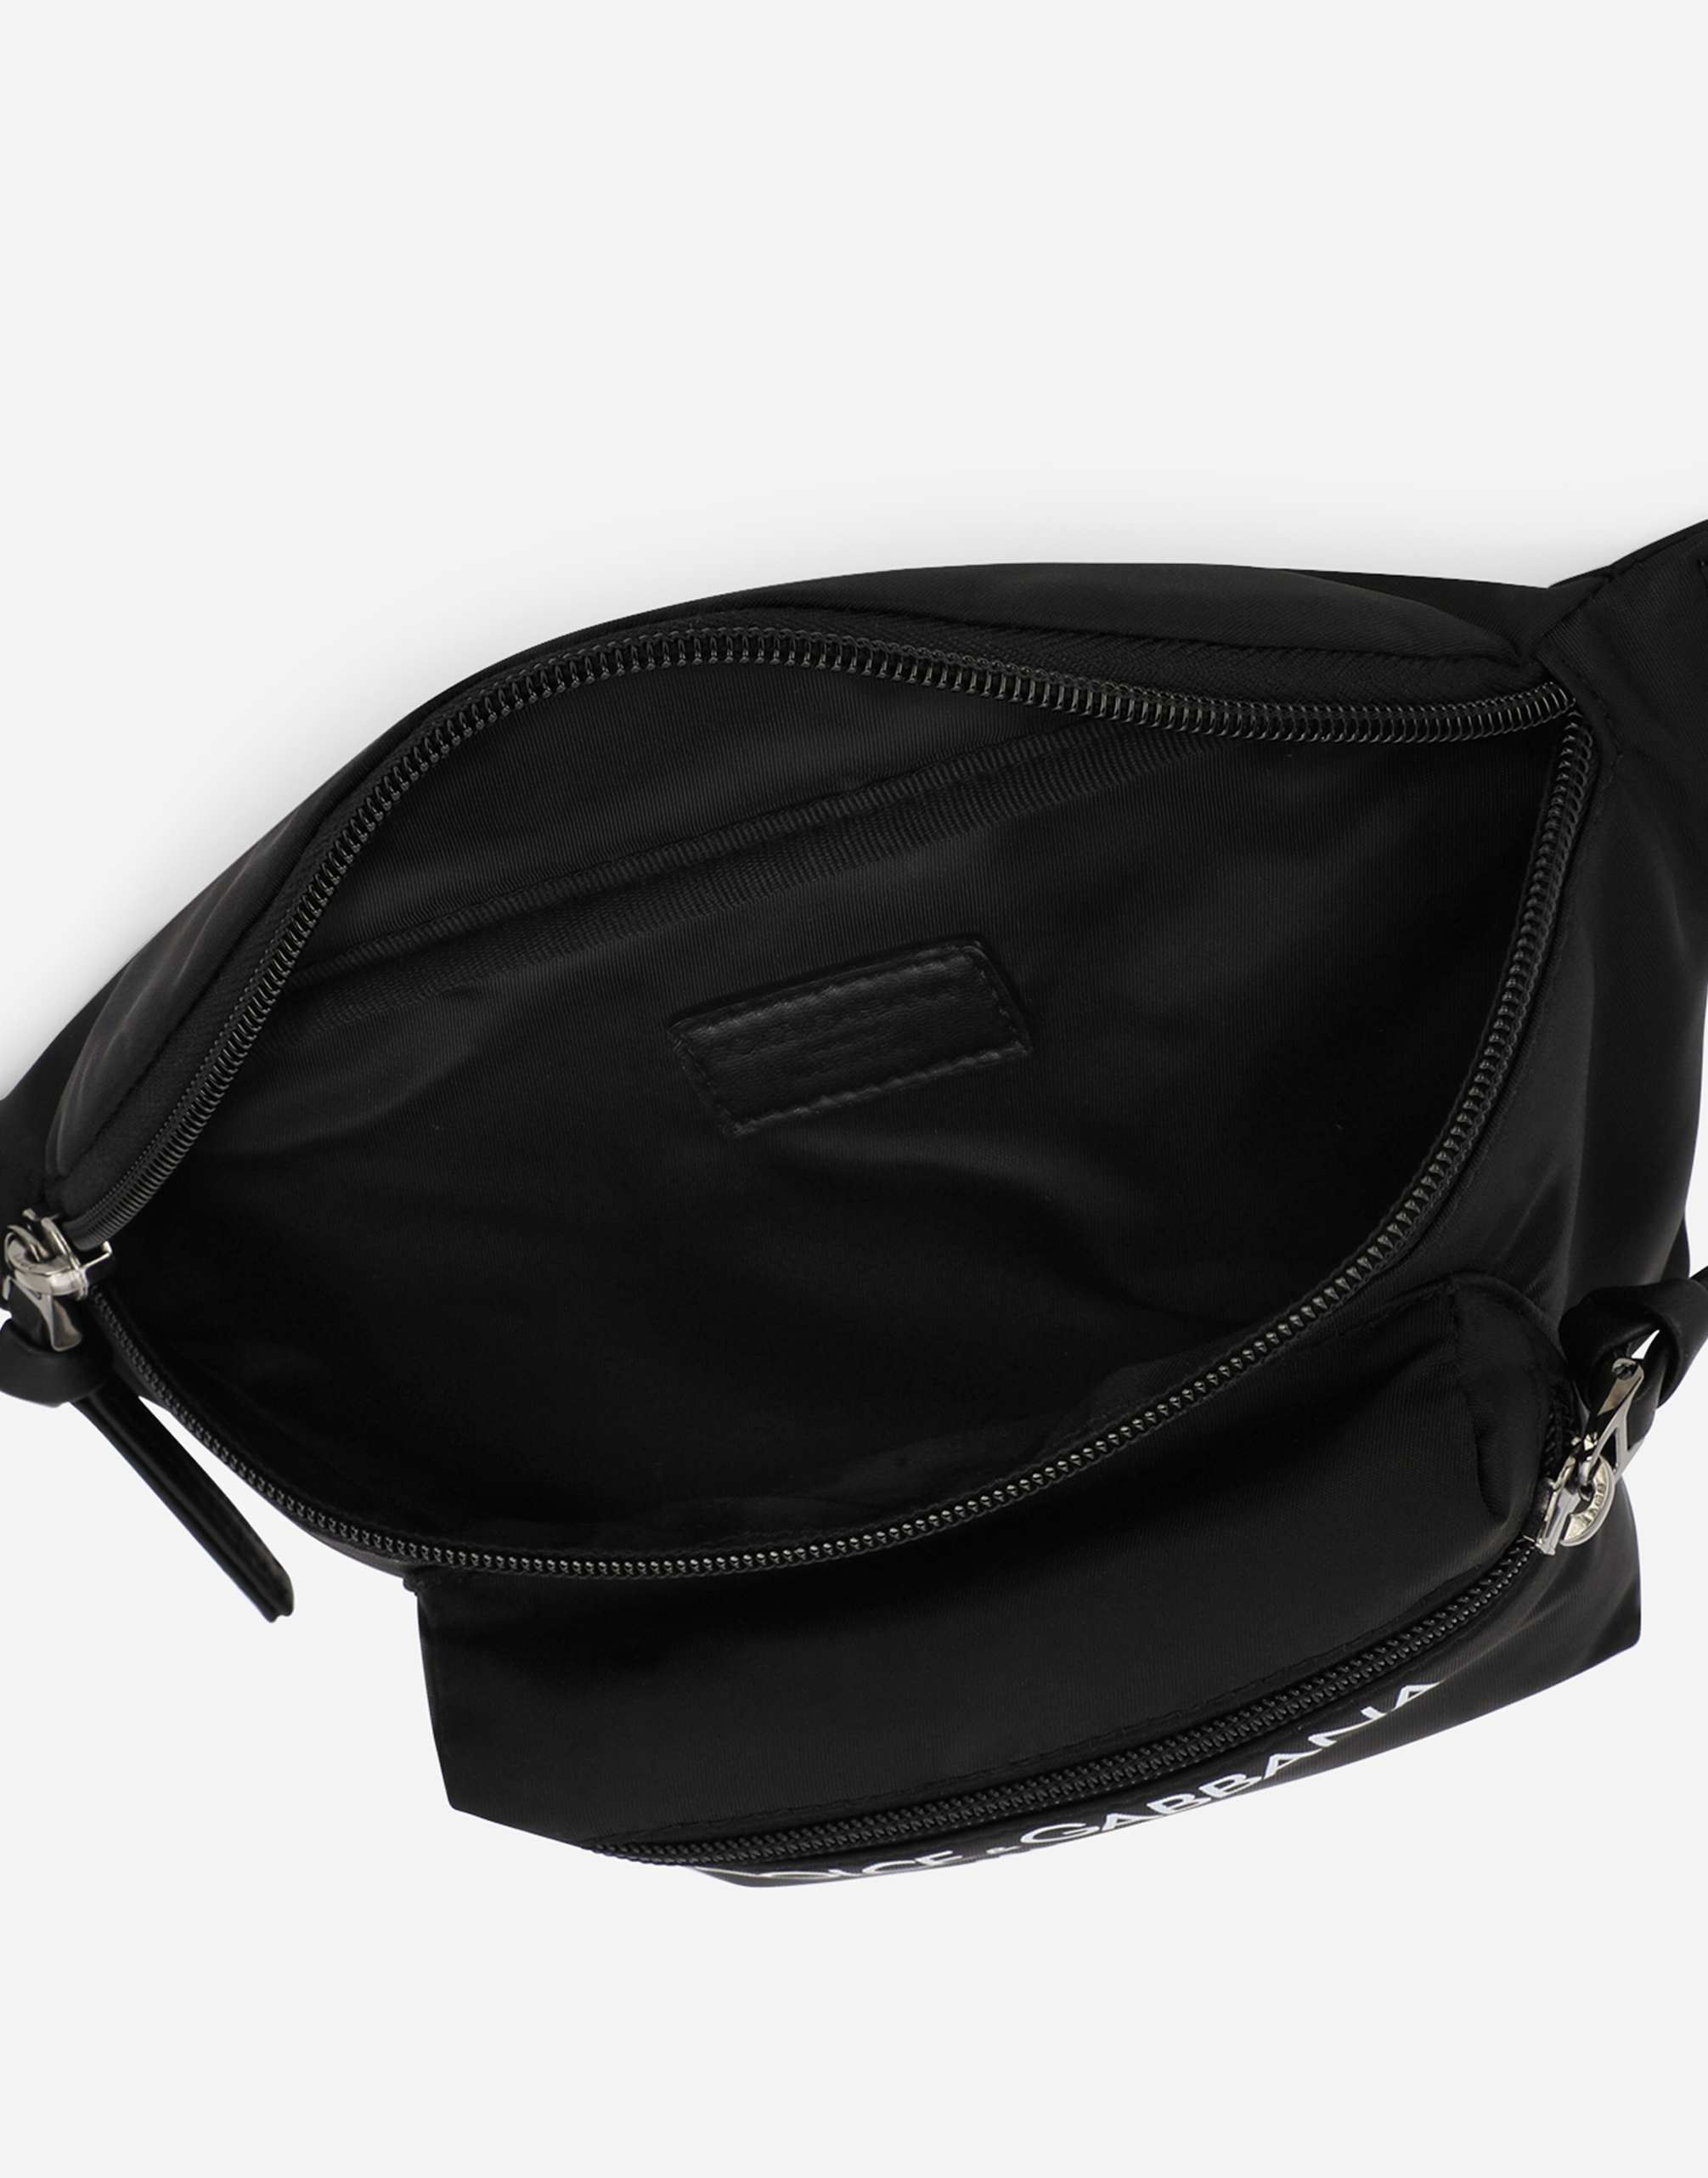 Shop Dolce & Gabbana Nylon Belt Bag With Dolce&gabbana Milano Print In Black